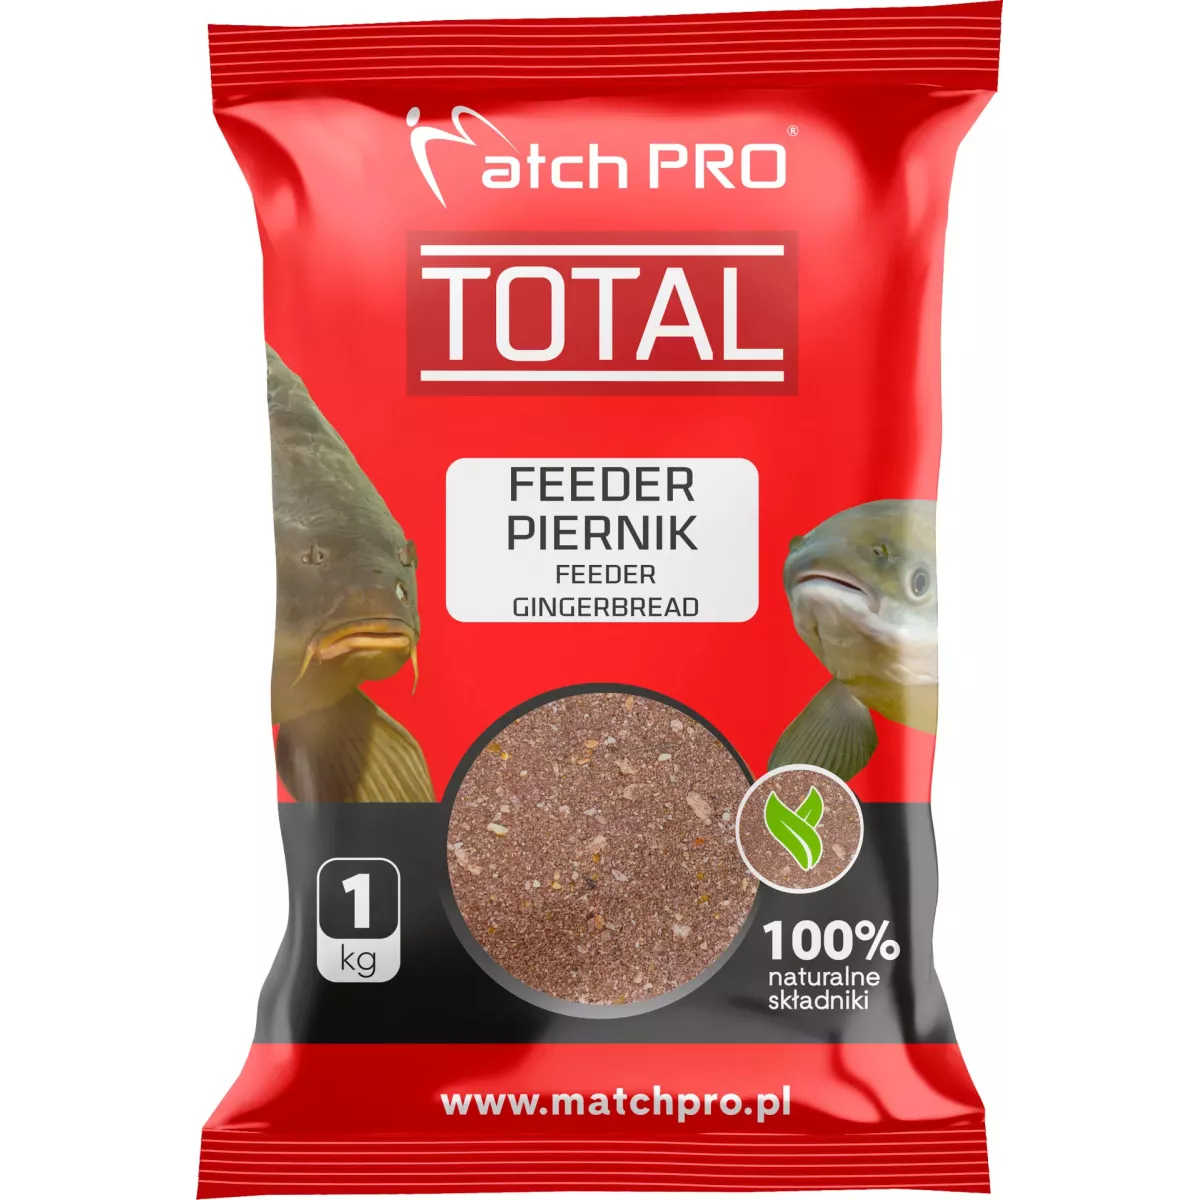 Zanęta MatchPro Total 1kg - FEEDER PIERNIK